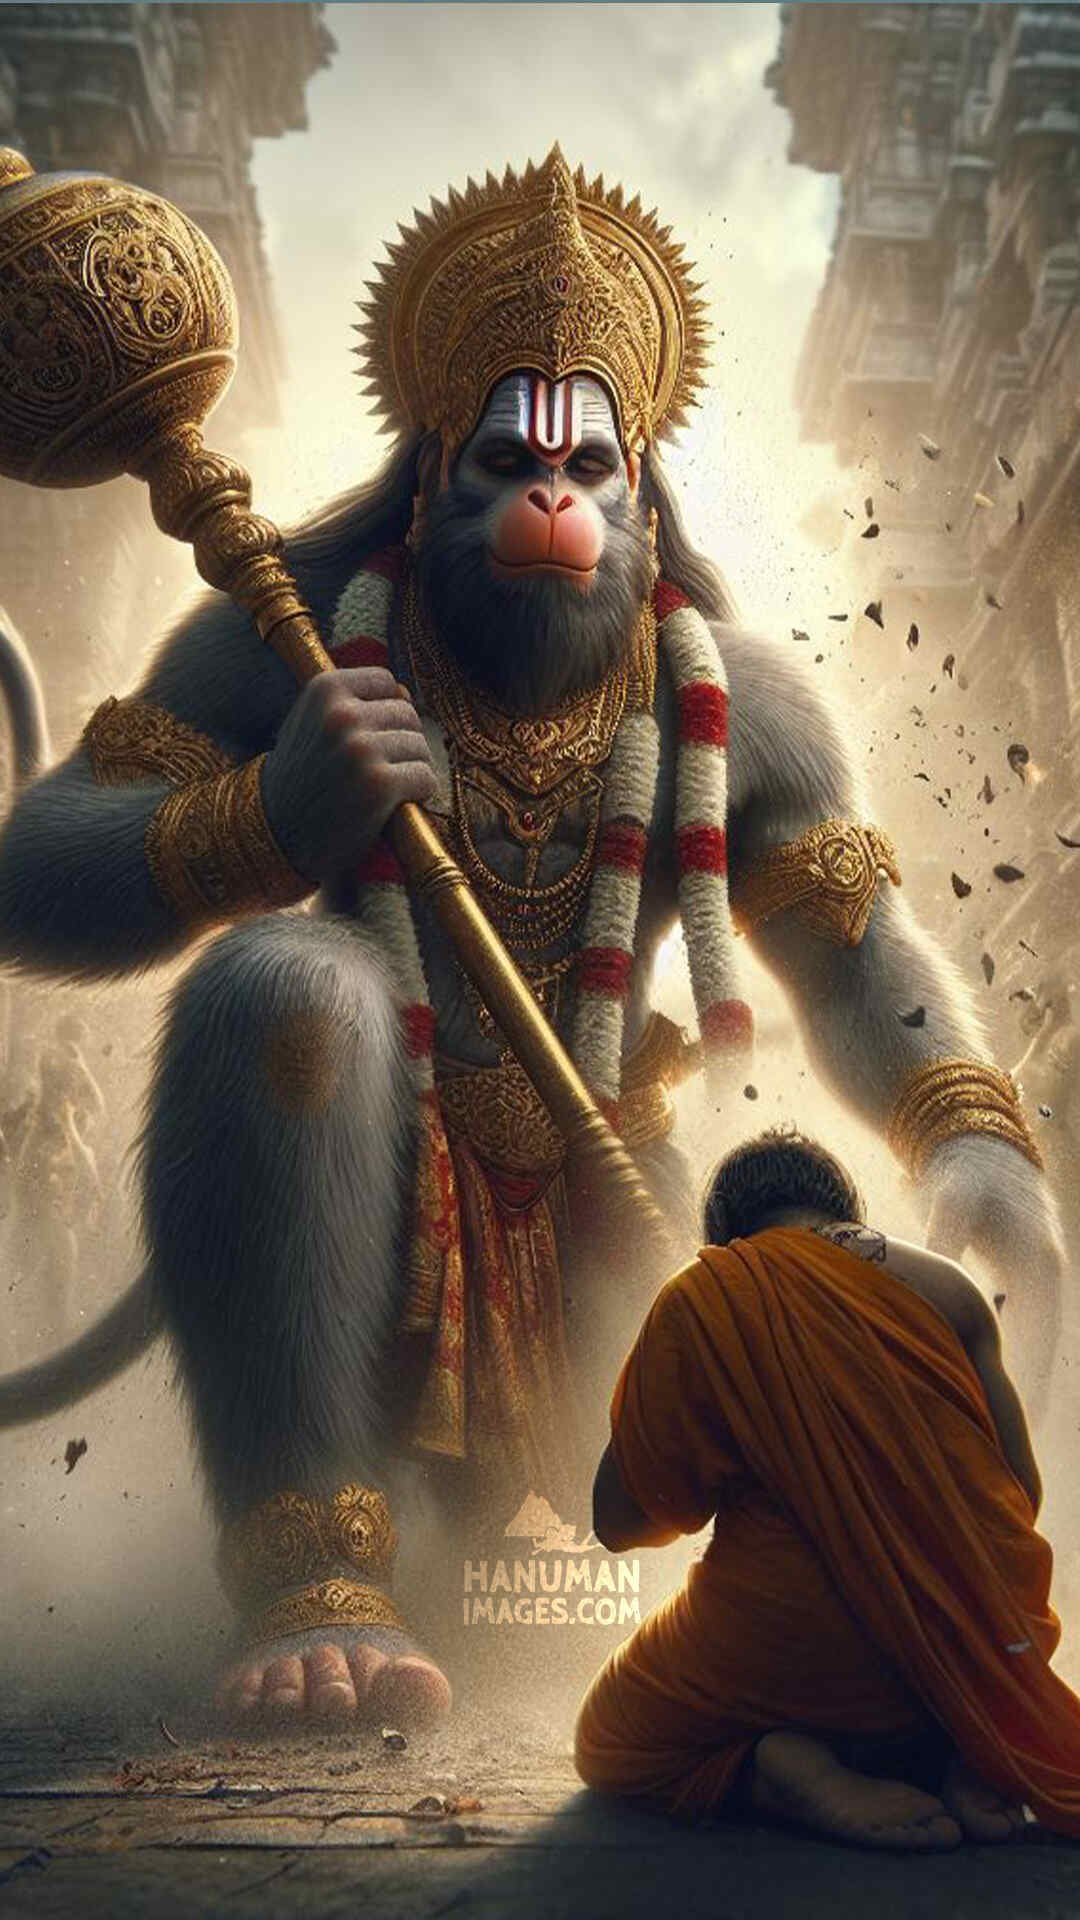 The all learned god hanuman